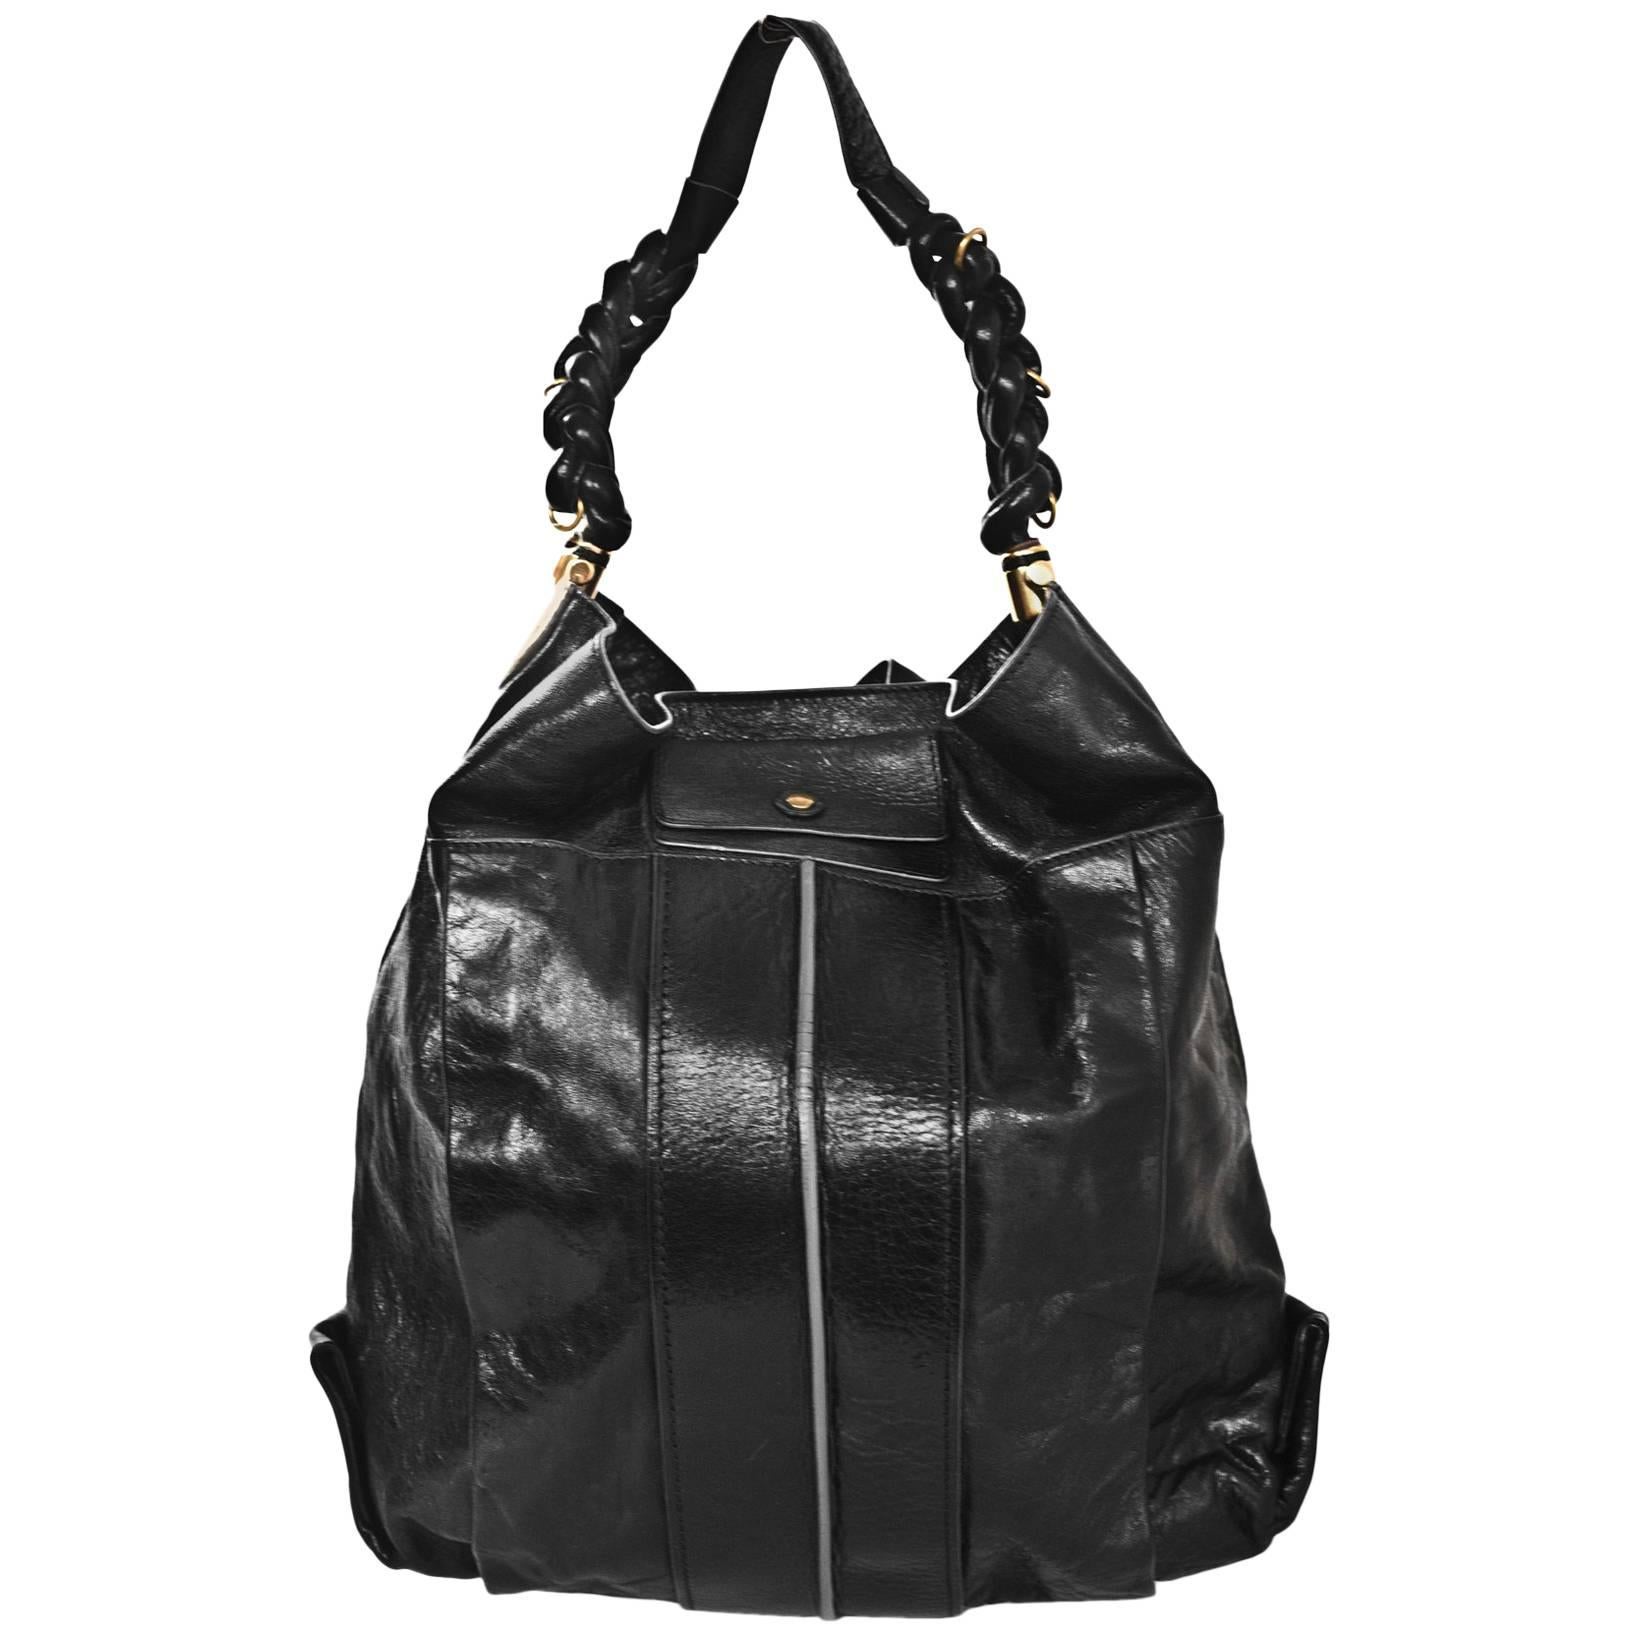 Chloe Black Leather Hobo Bag